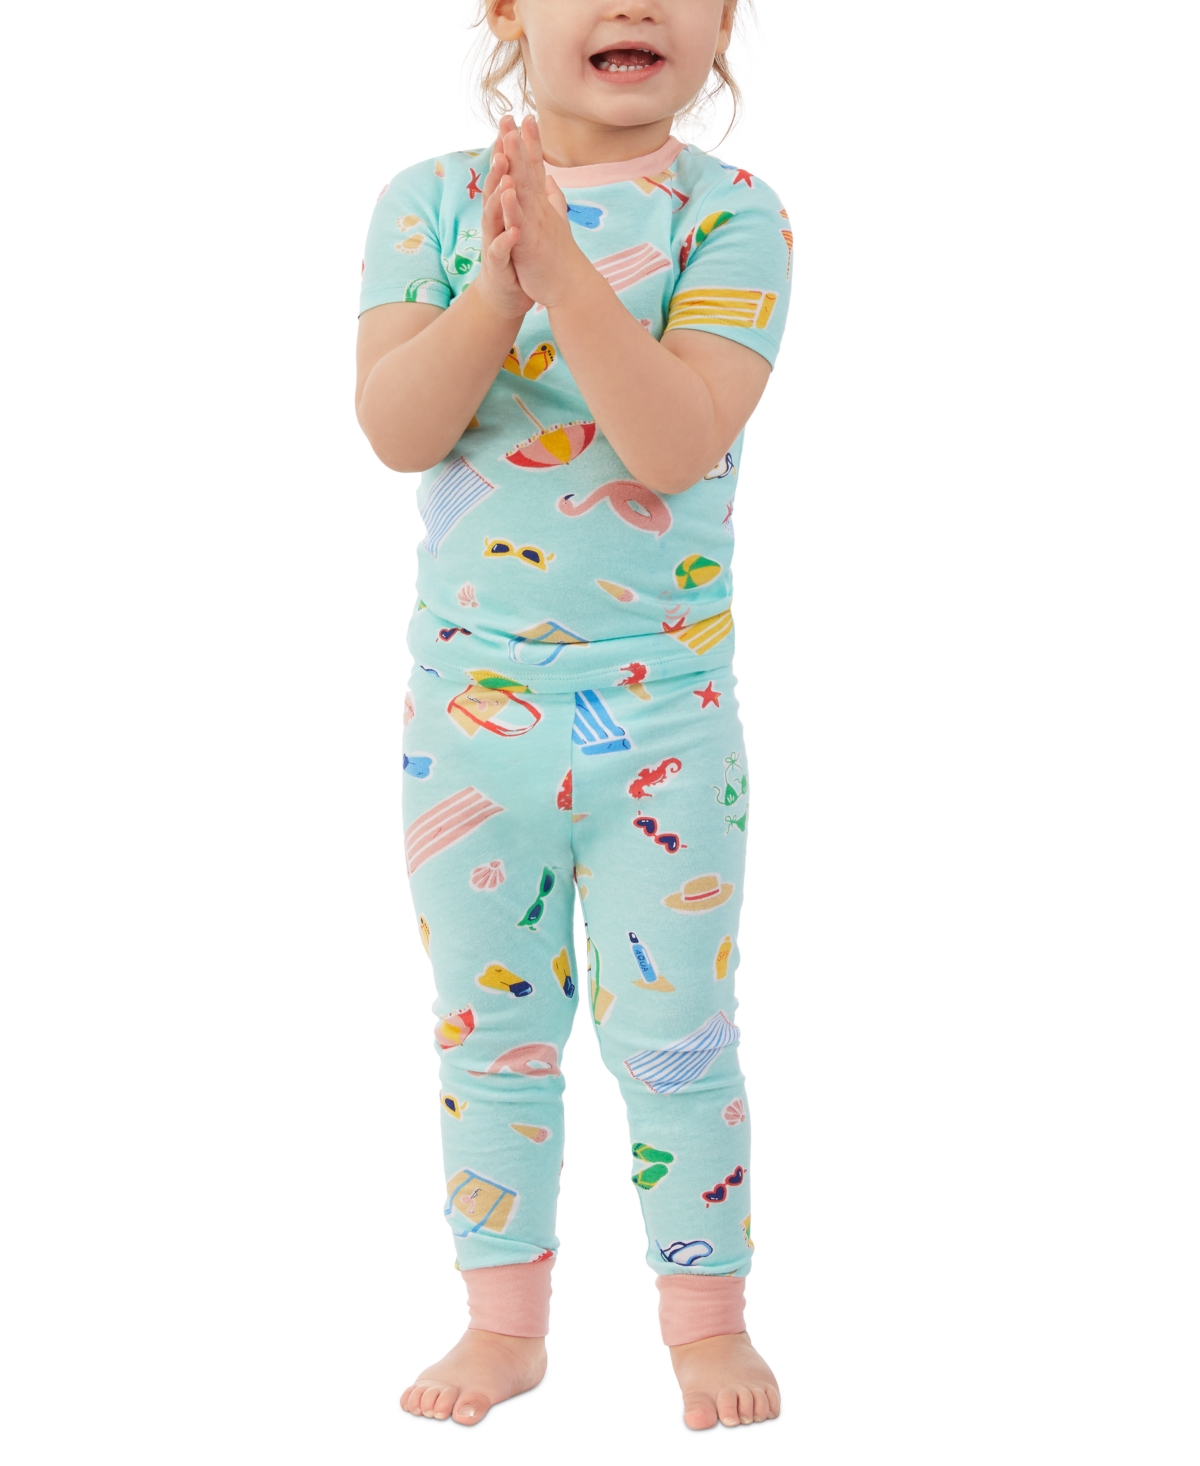 Cuddl Duds Women's 2-Pc. Printed Boxer Pajamas Set - Macy's